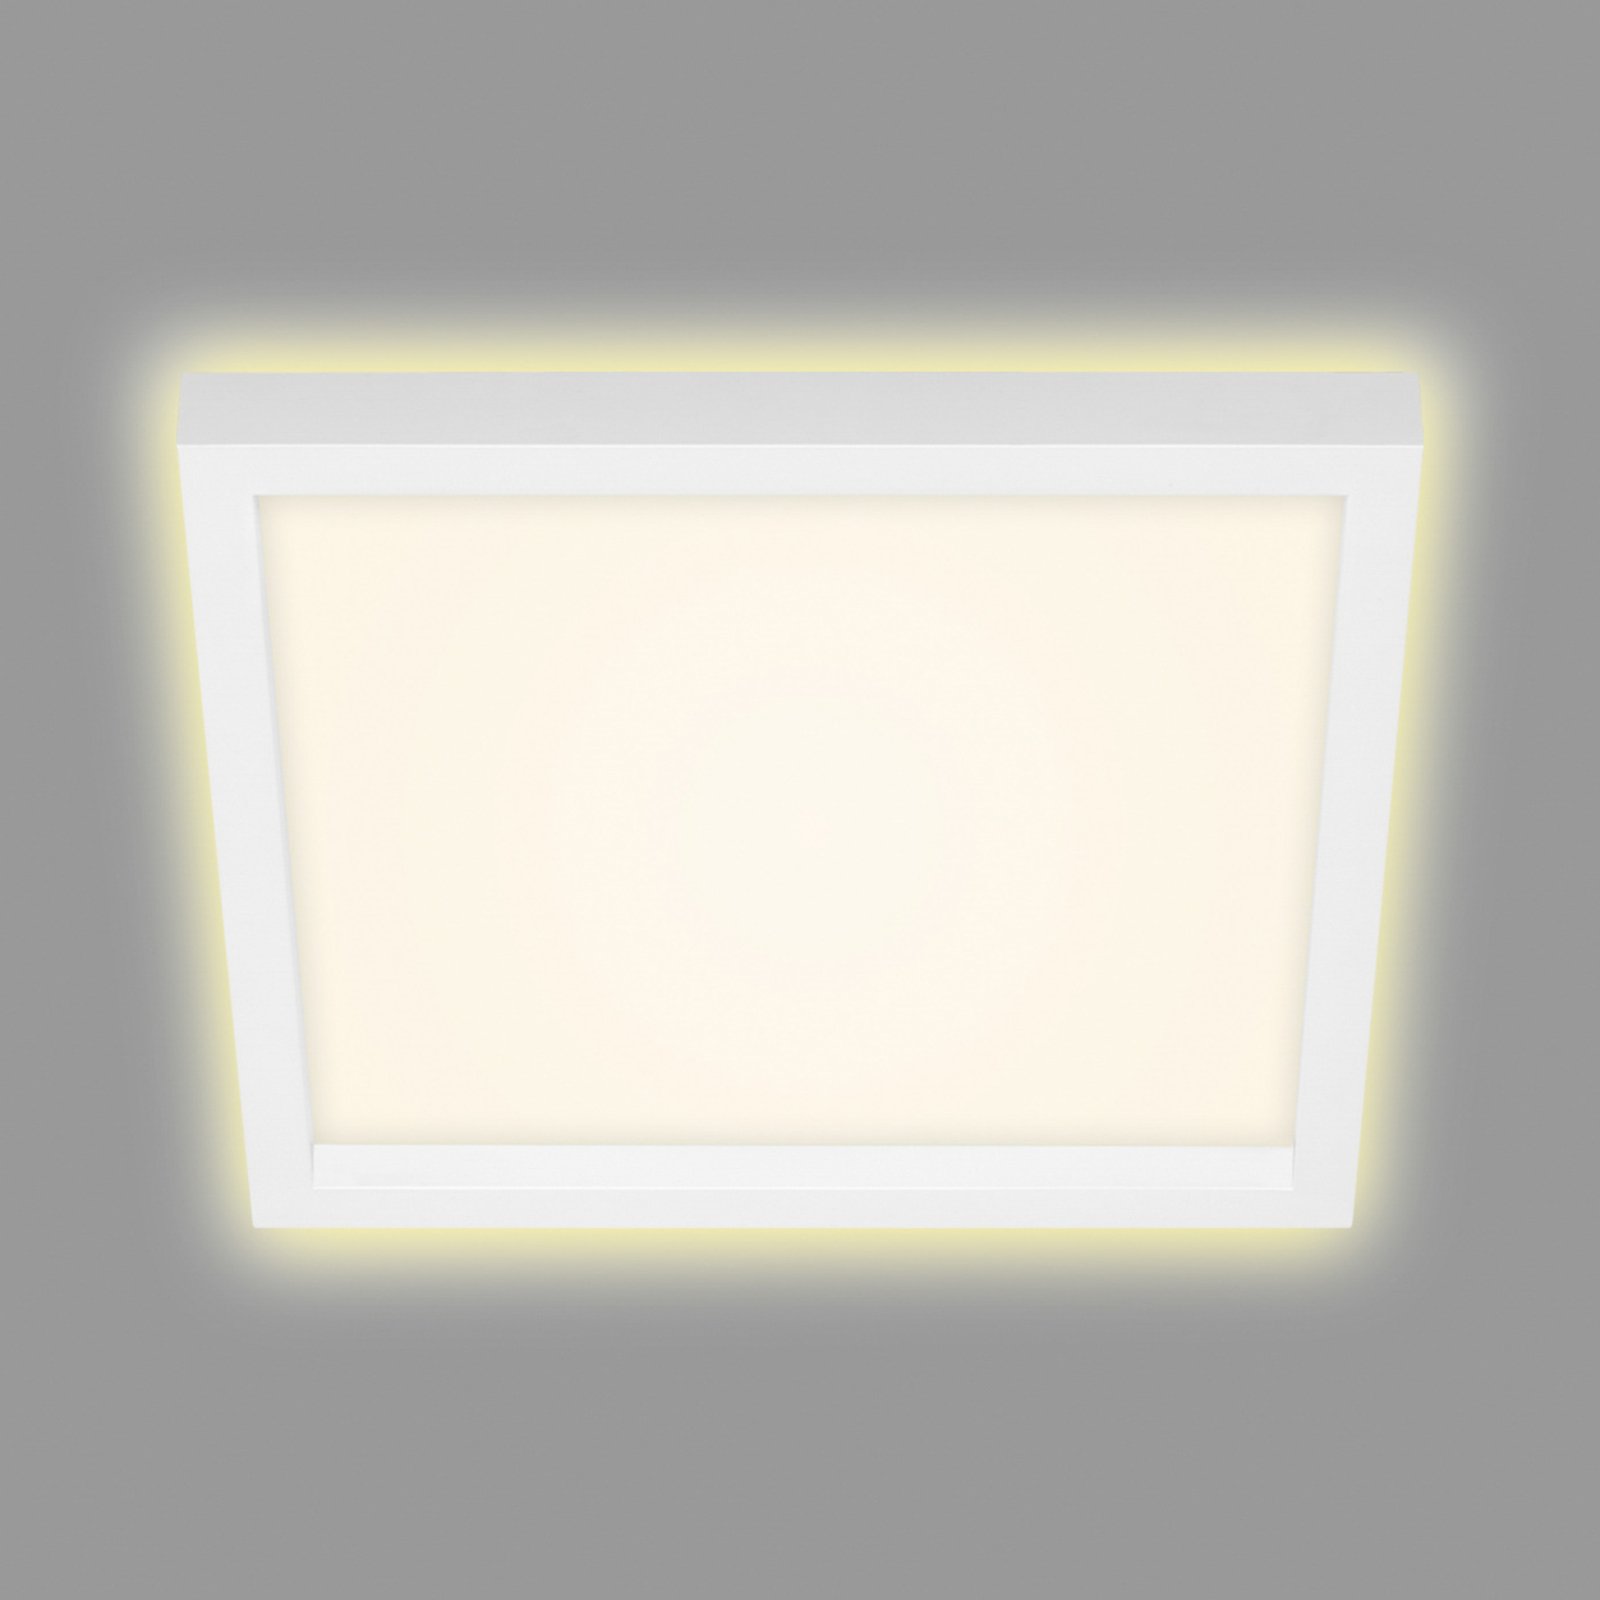 Lampa sufitowa LED 7362, 29 x 29 cm, biała